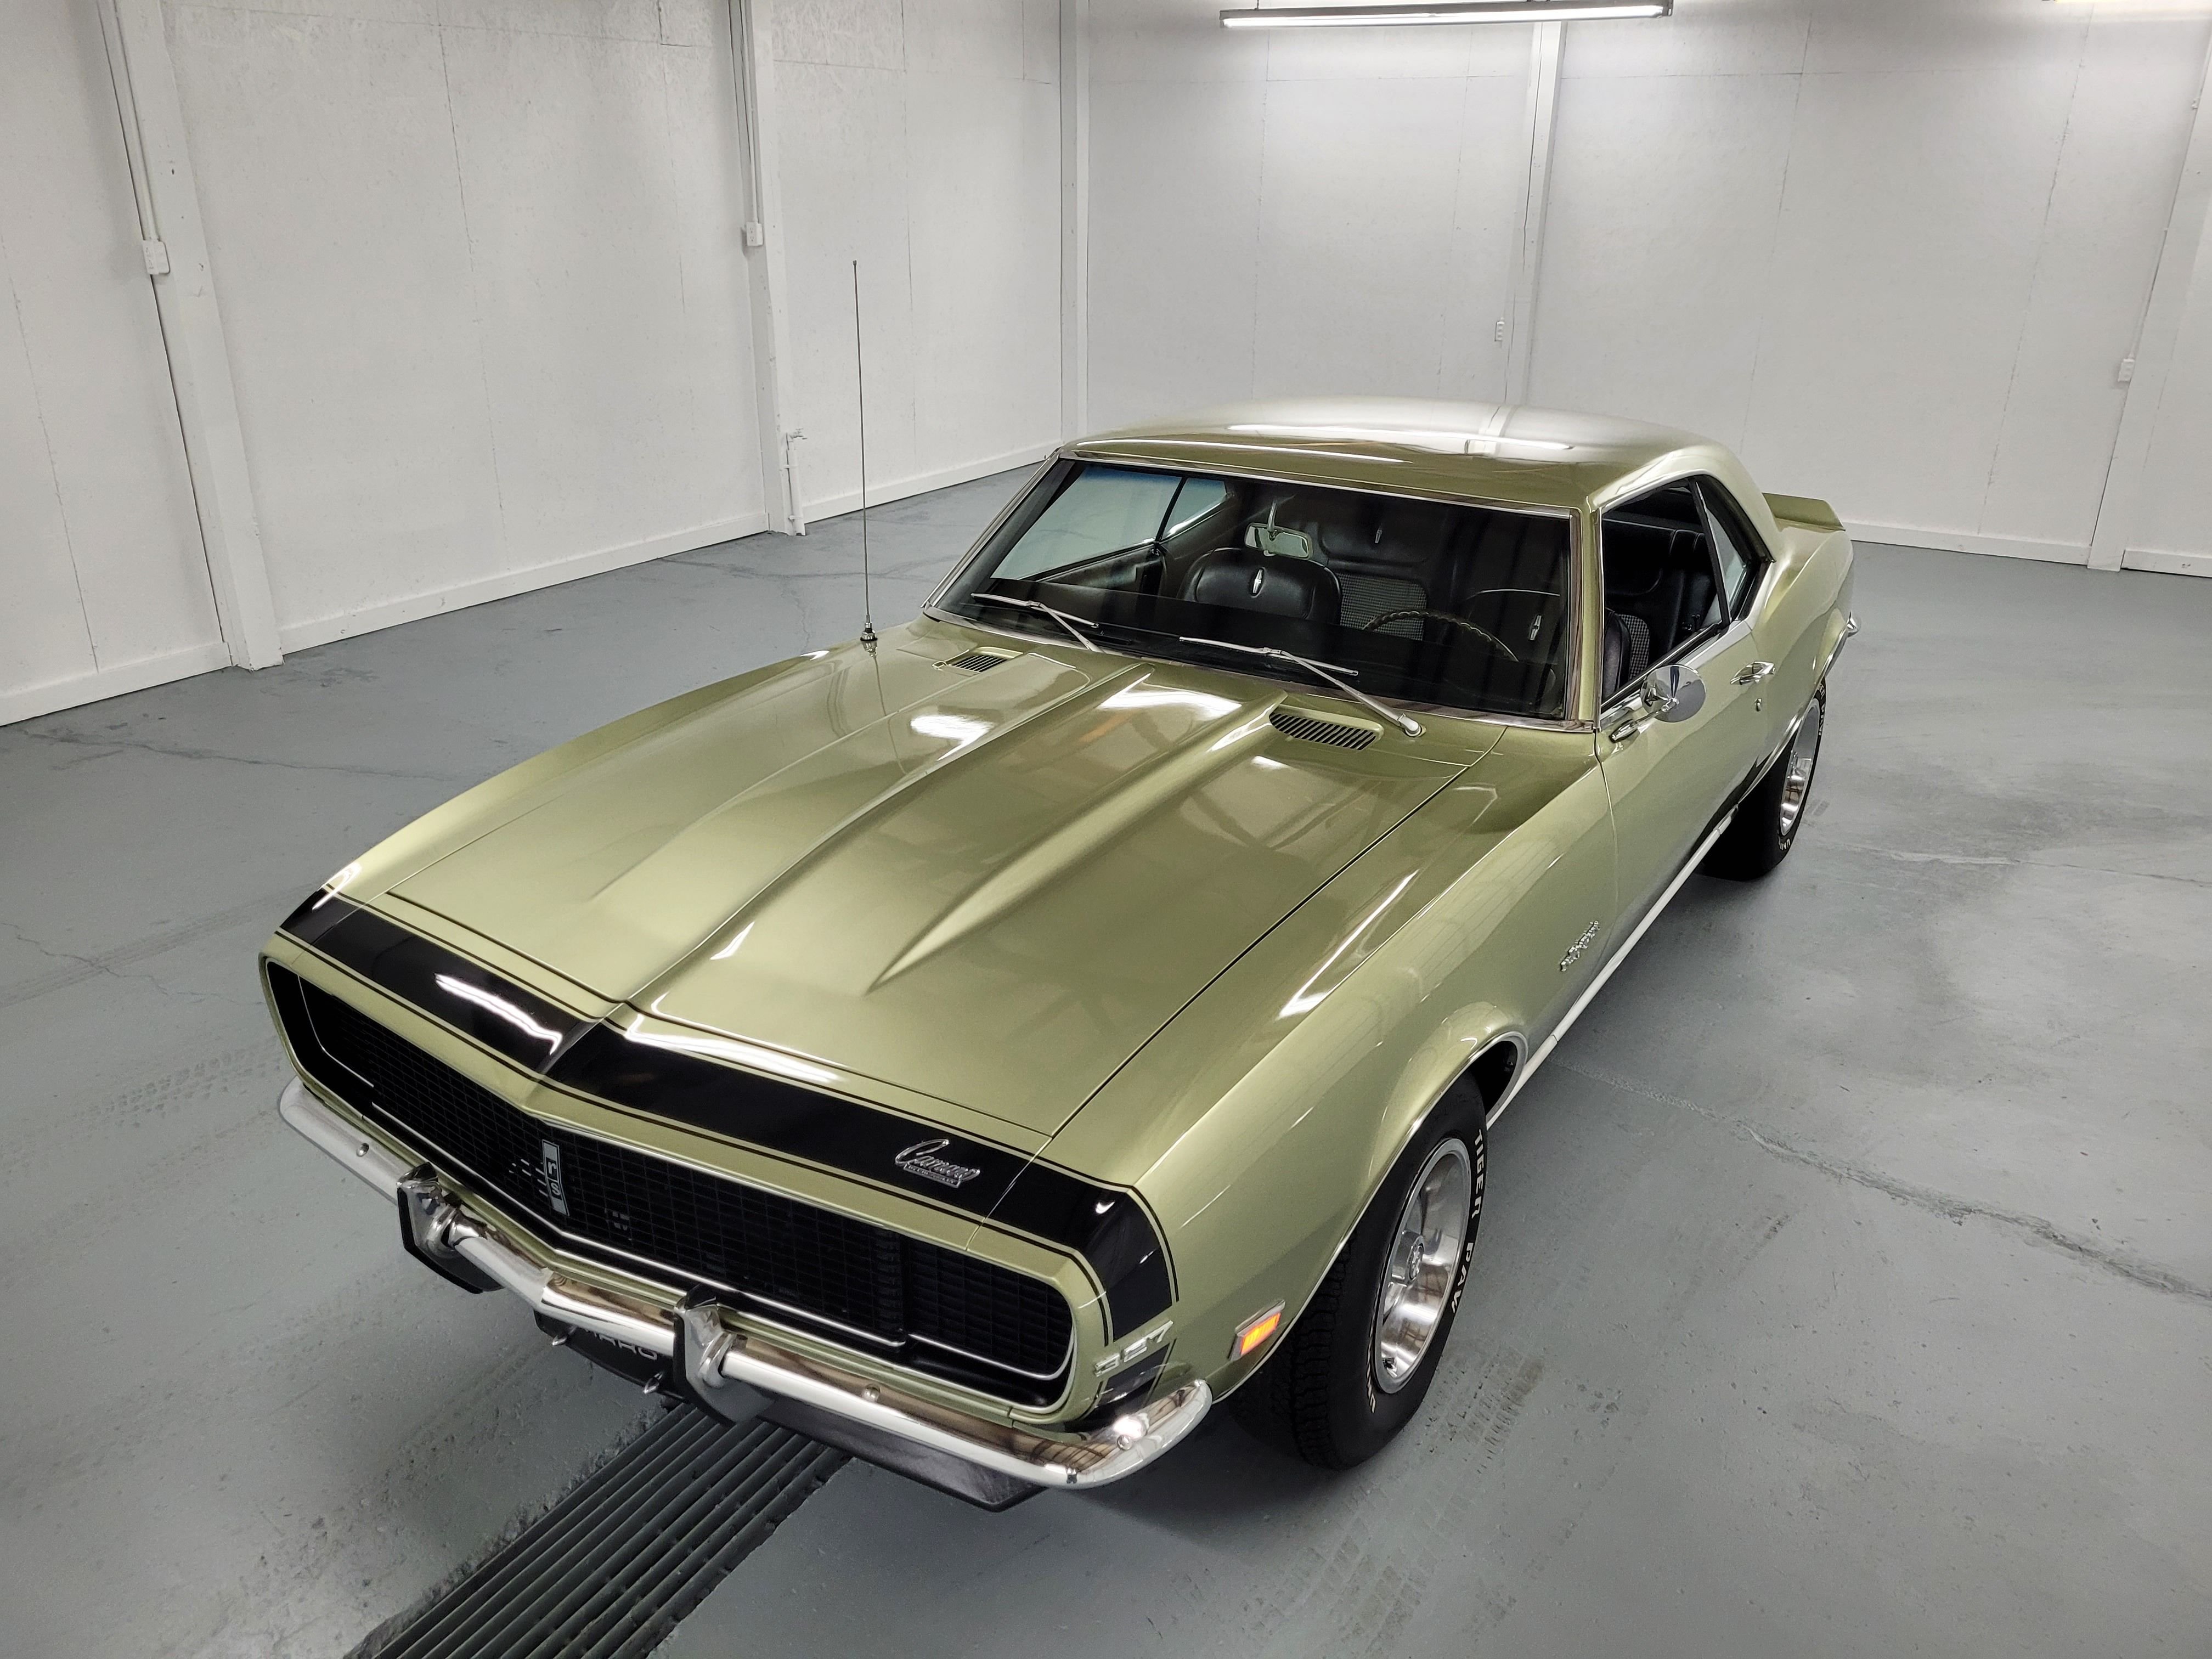 1968 Chevrolet Camaro | GAA Classic Cars